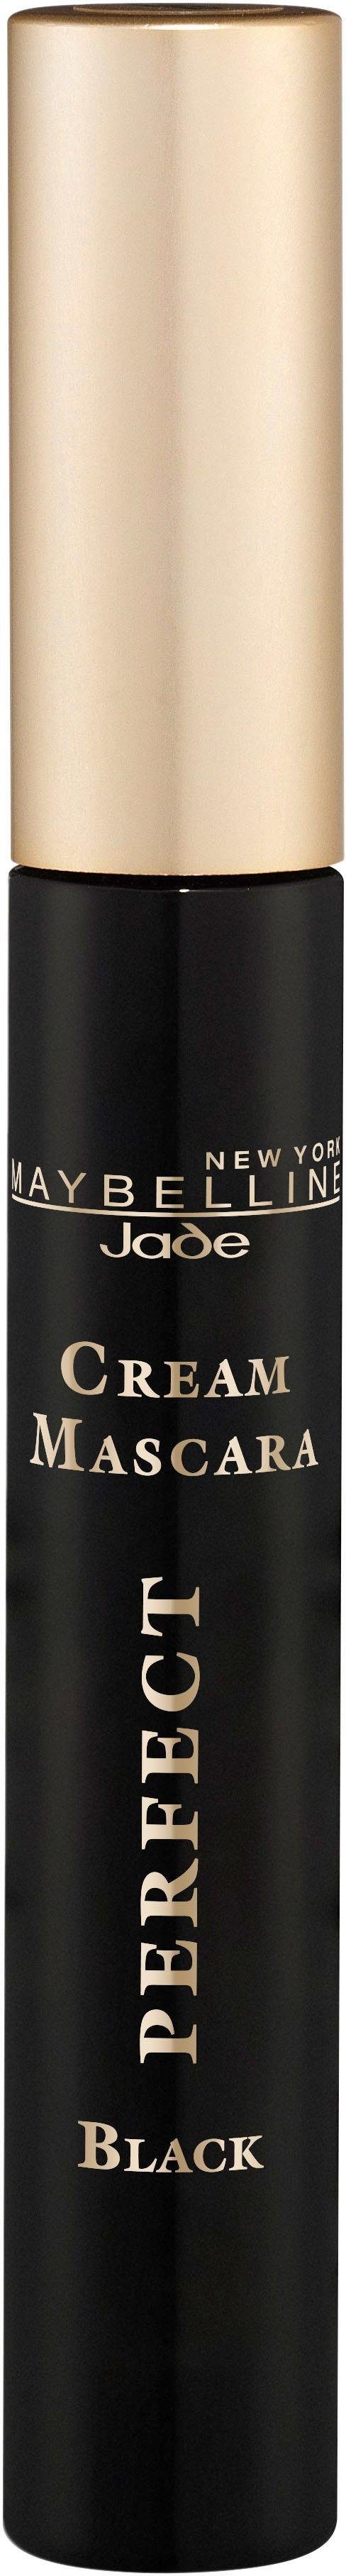 MAYBELLINE NEW Mascara, Cream Protein Mit Mascara pflegendem YORK